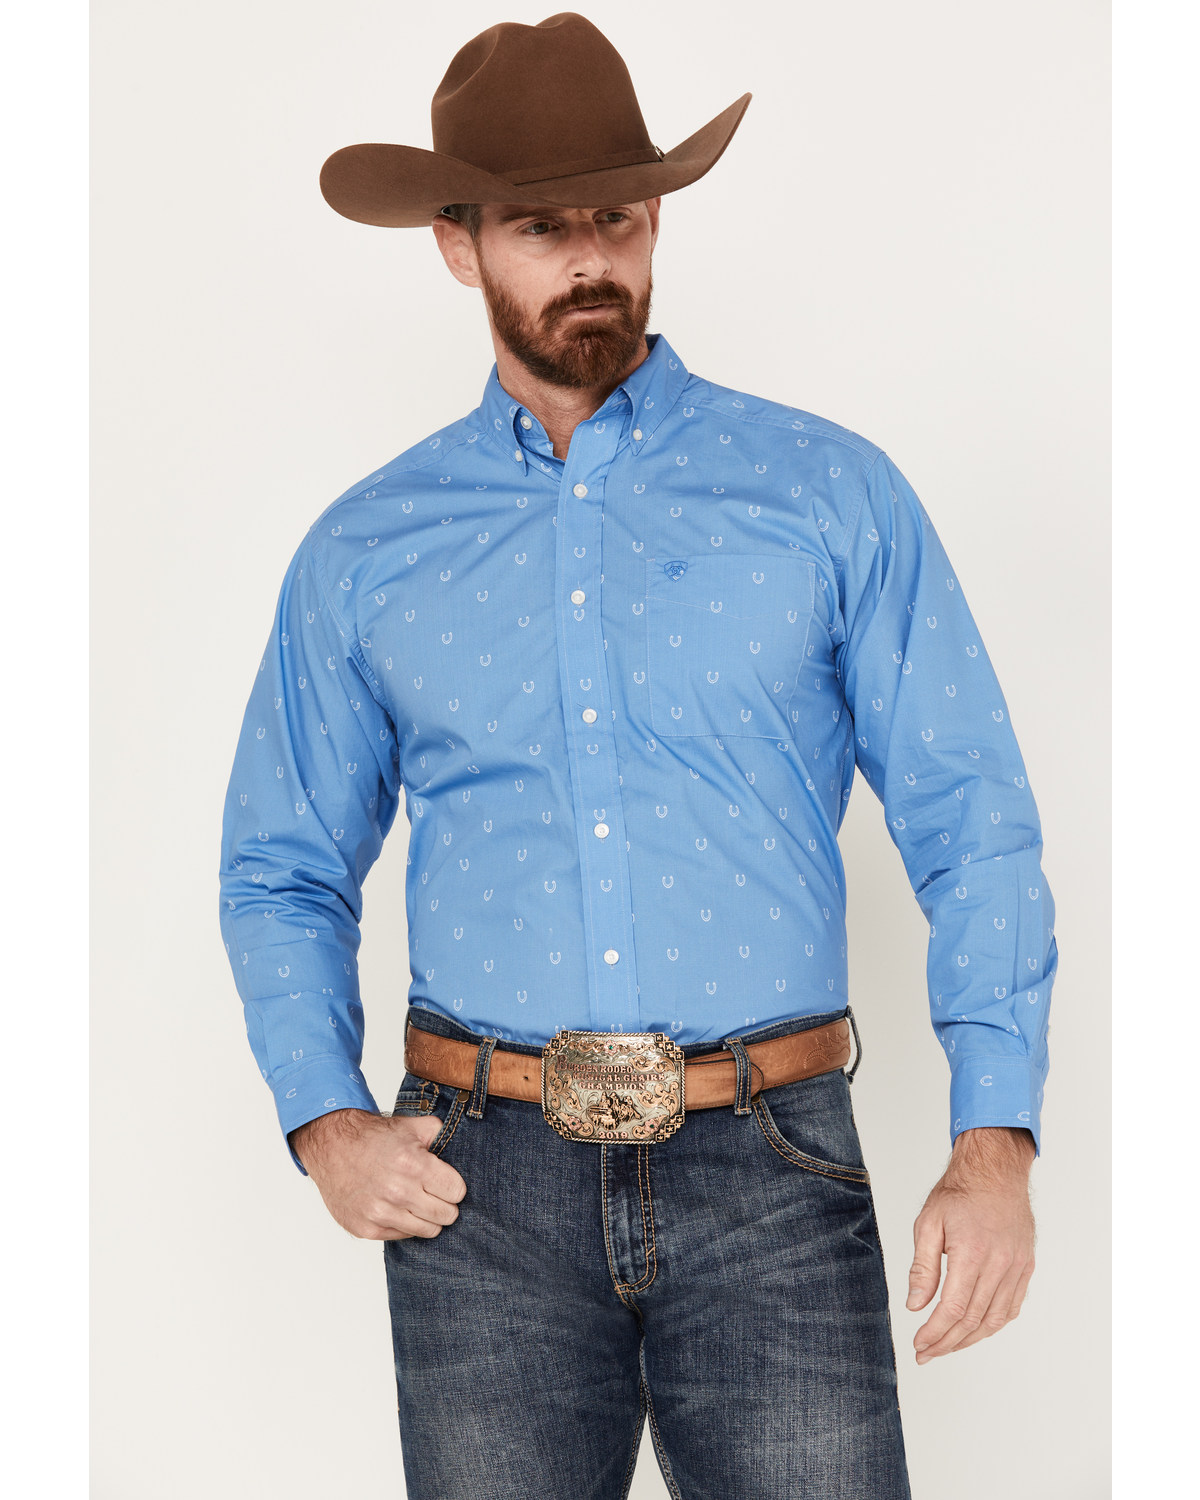 Ariat Men's Leroy Classic Fit Western Shirt